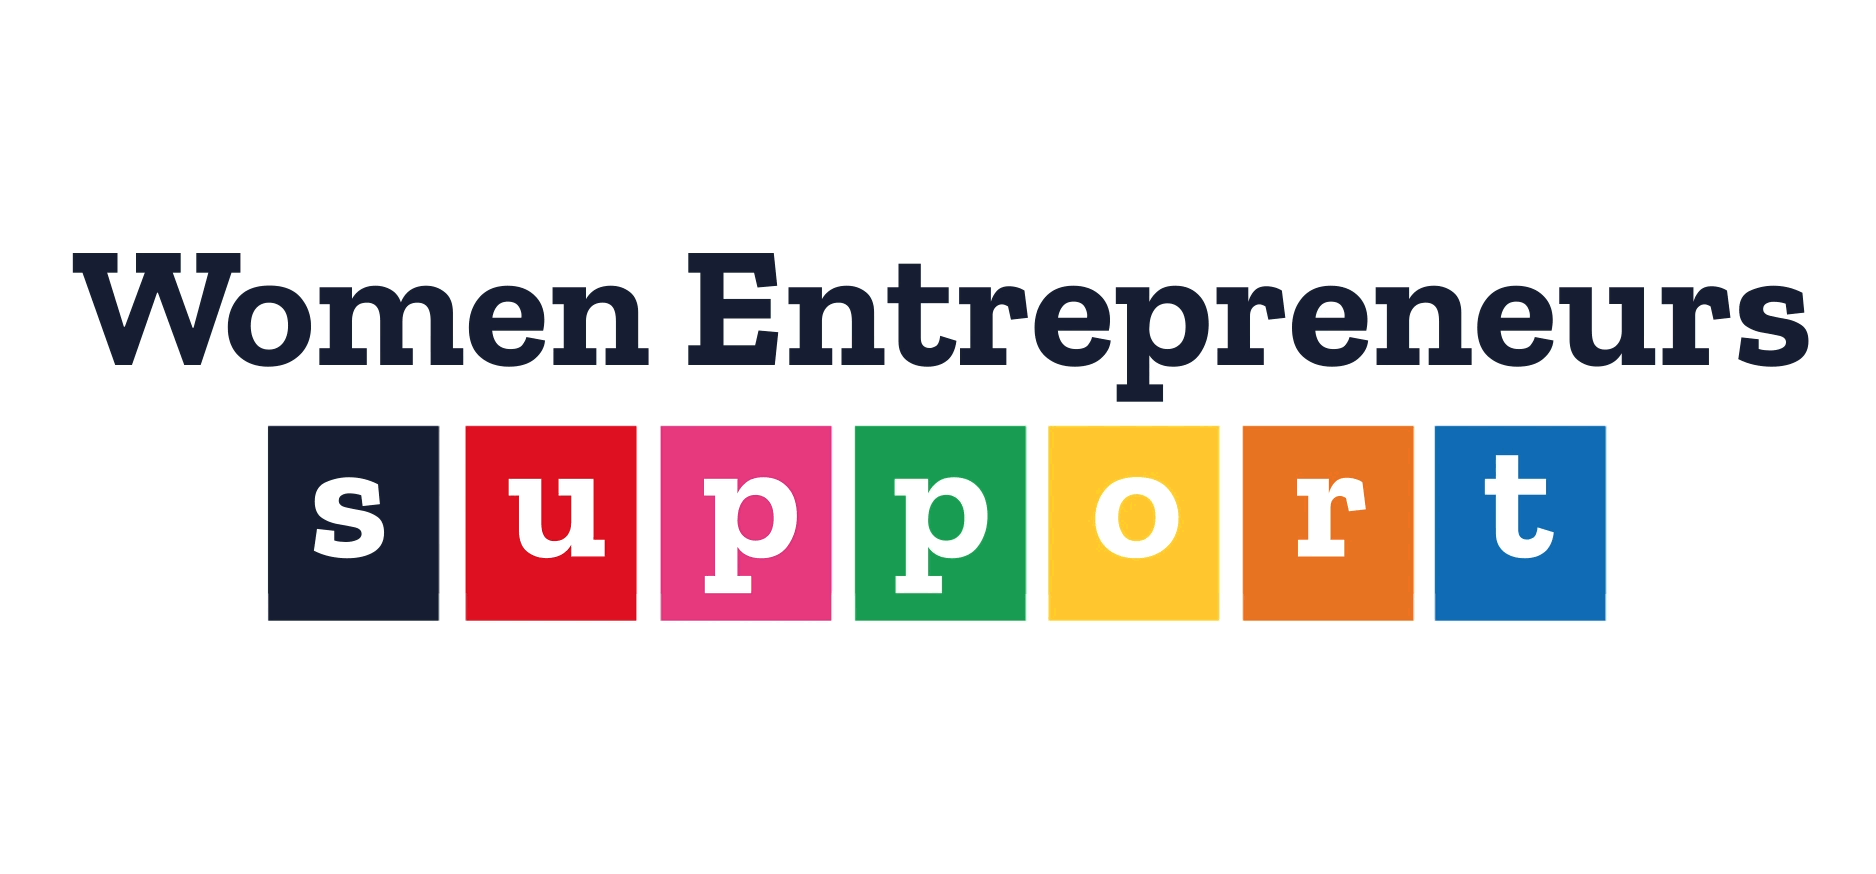 Women Entrepreneurs support, develop, empower, persist.